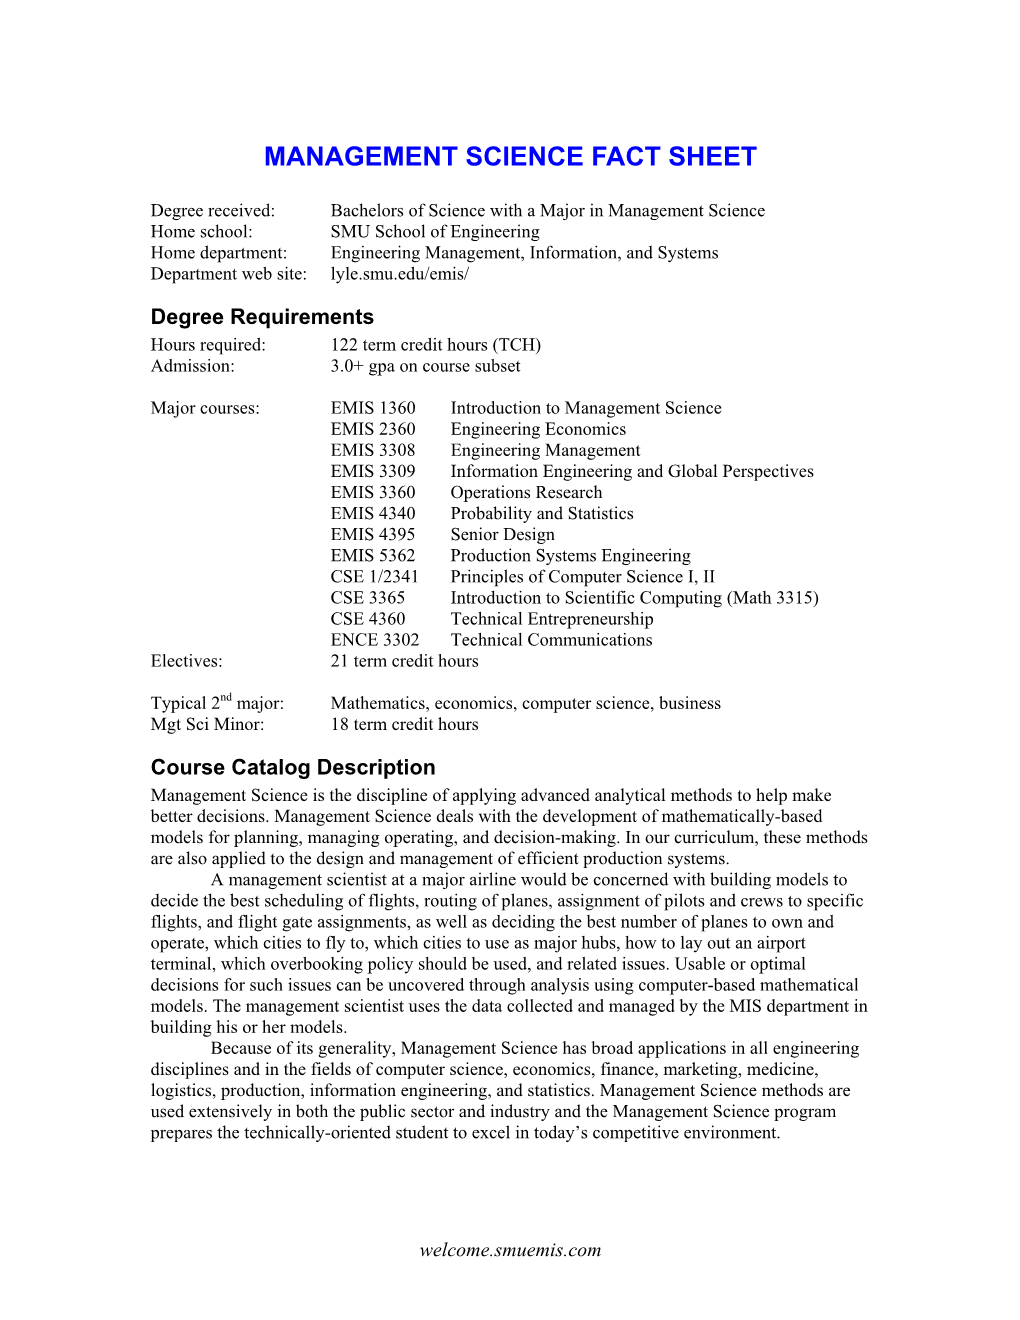 Management Science Fact Sheet